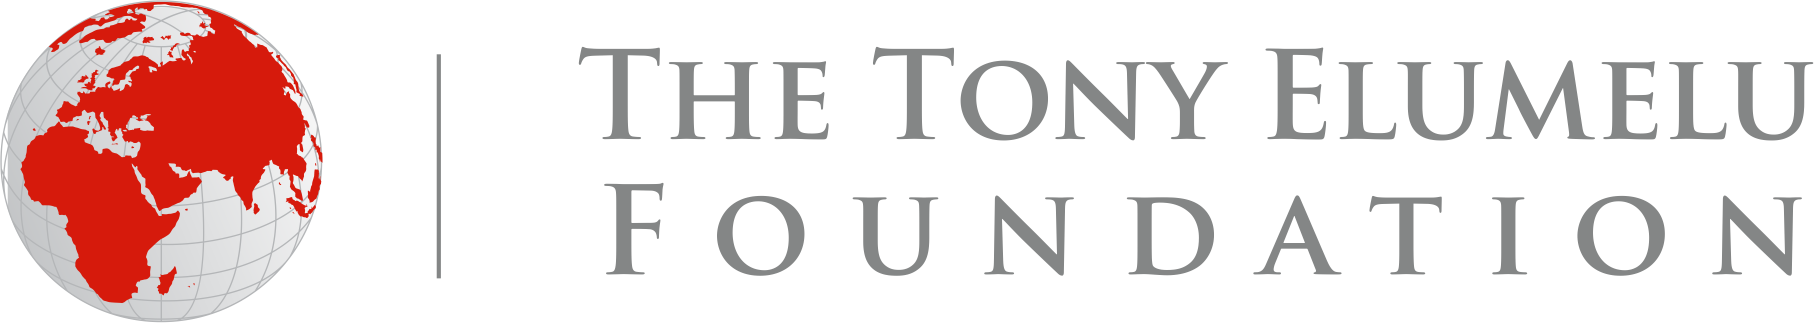 Tony Elumelu Foundation Forum